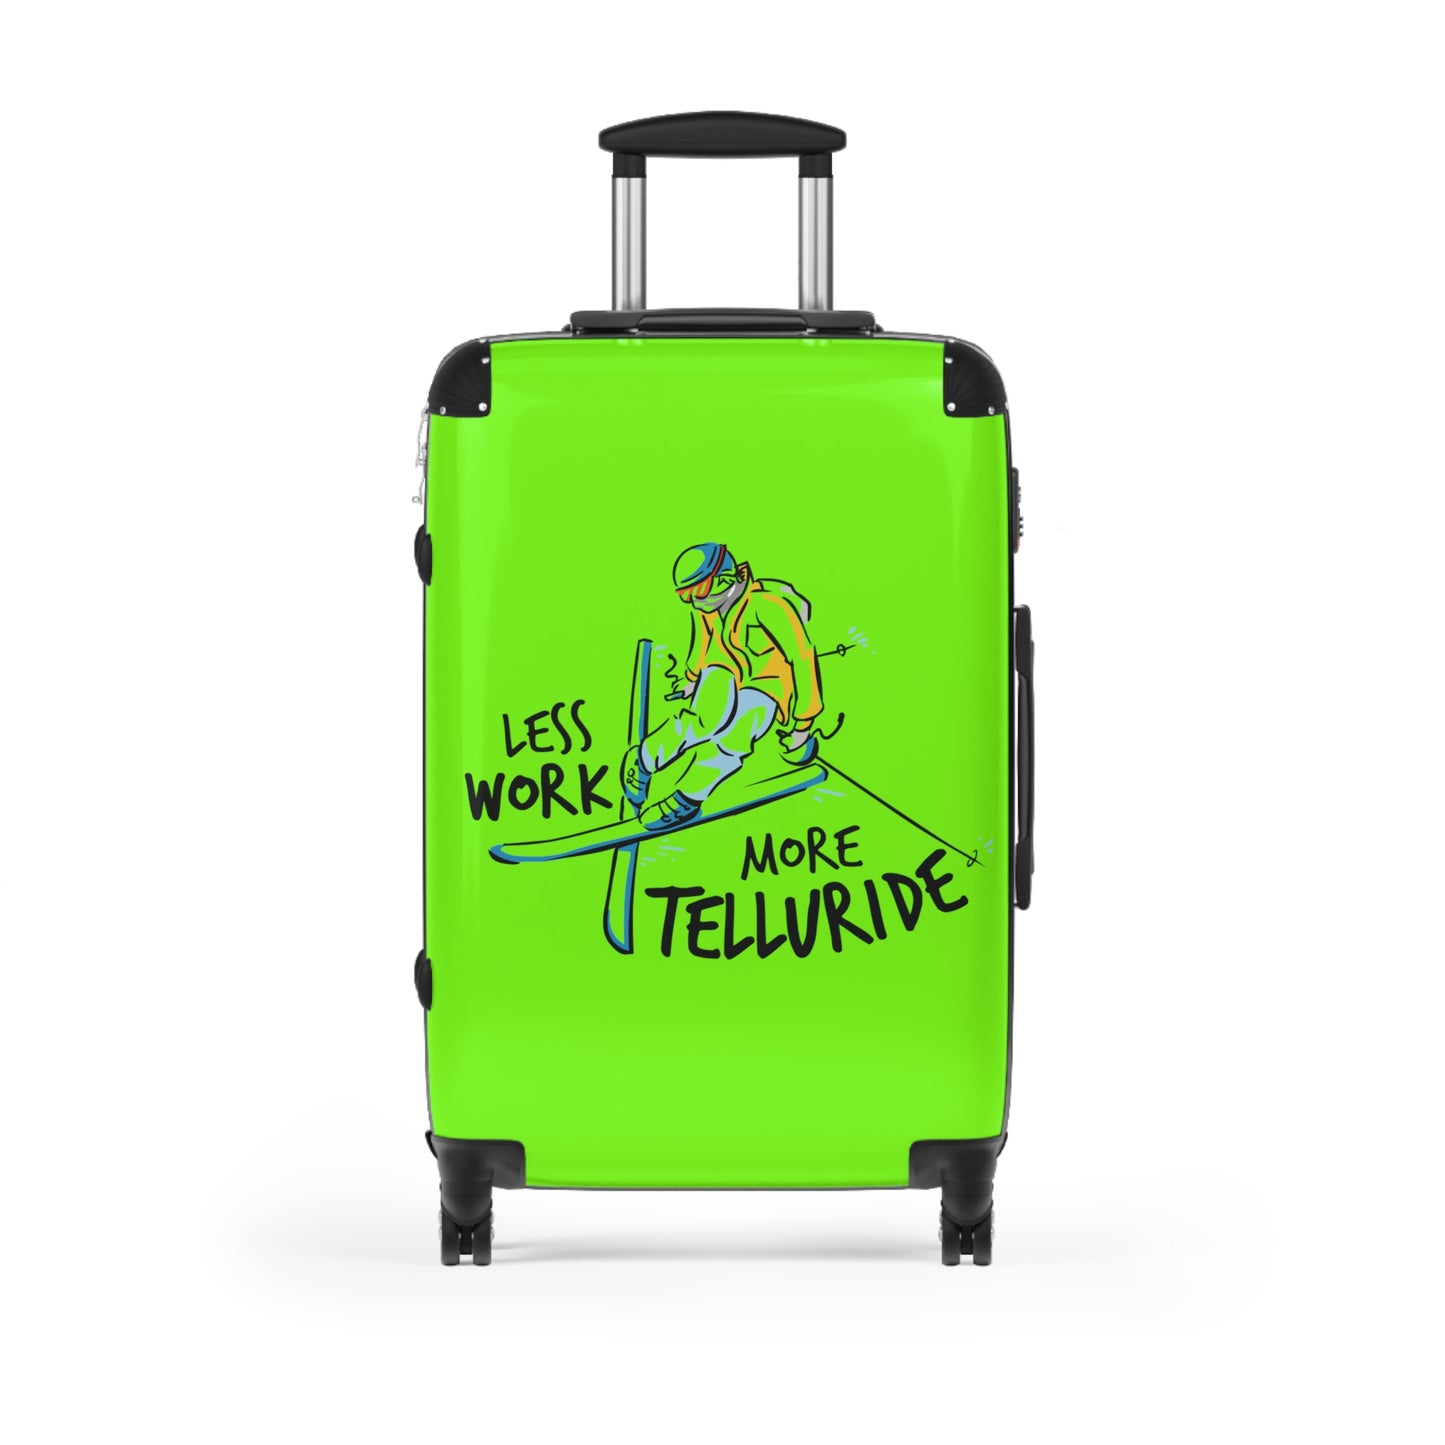 Less Work More Telluride Custom Luggage